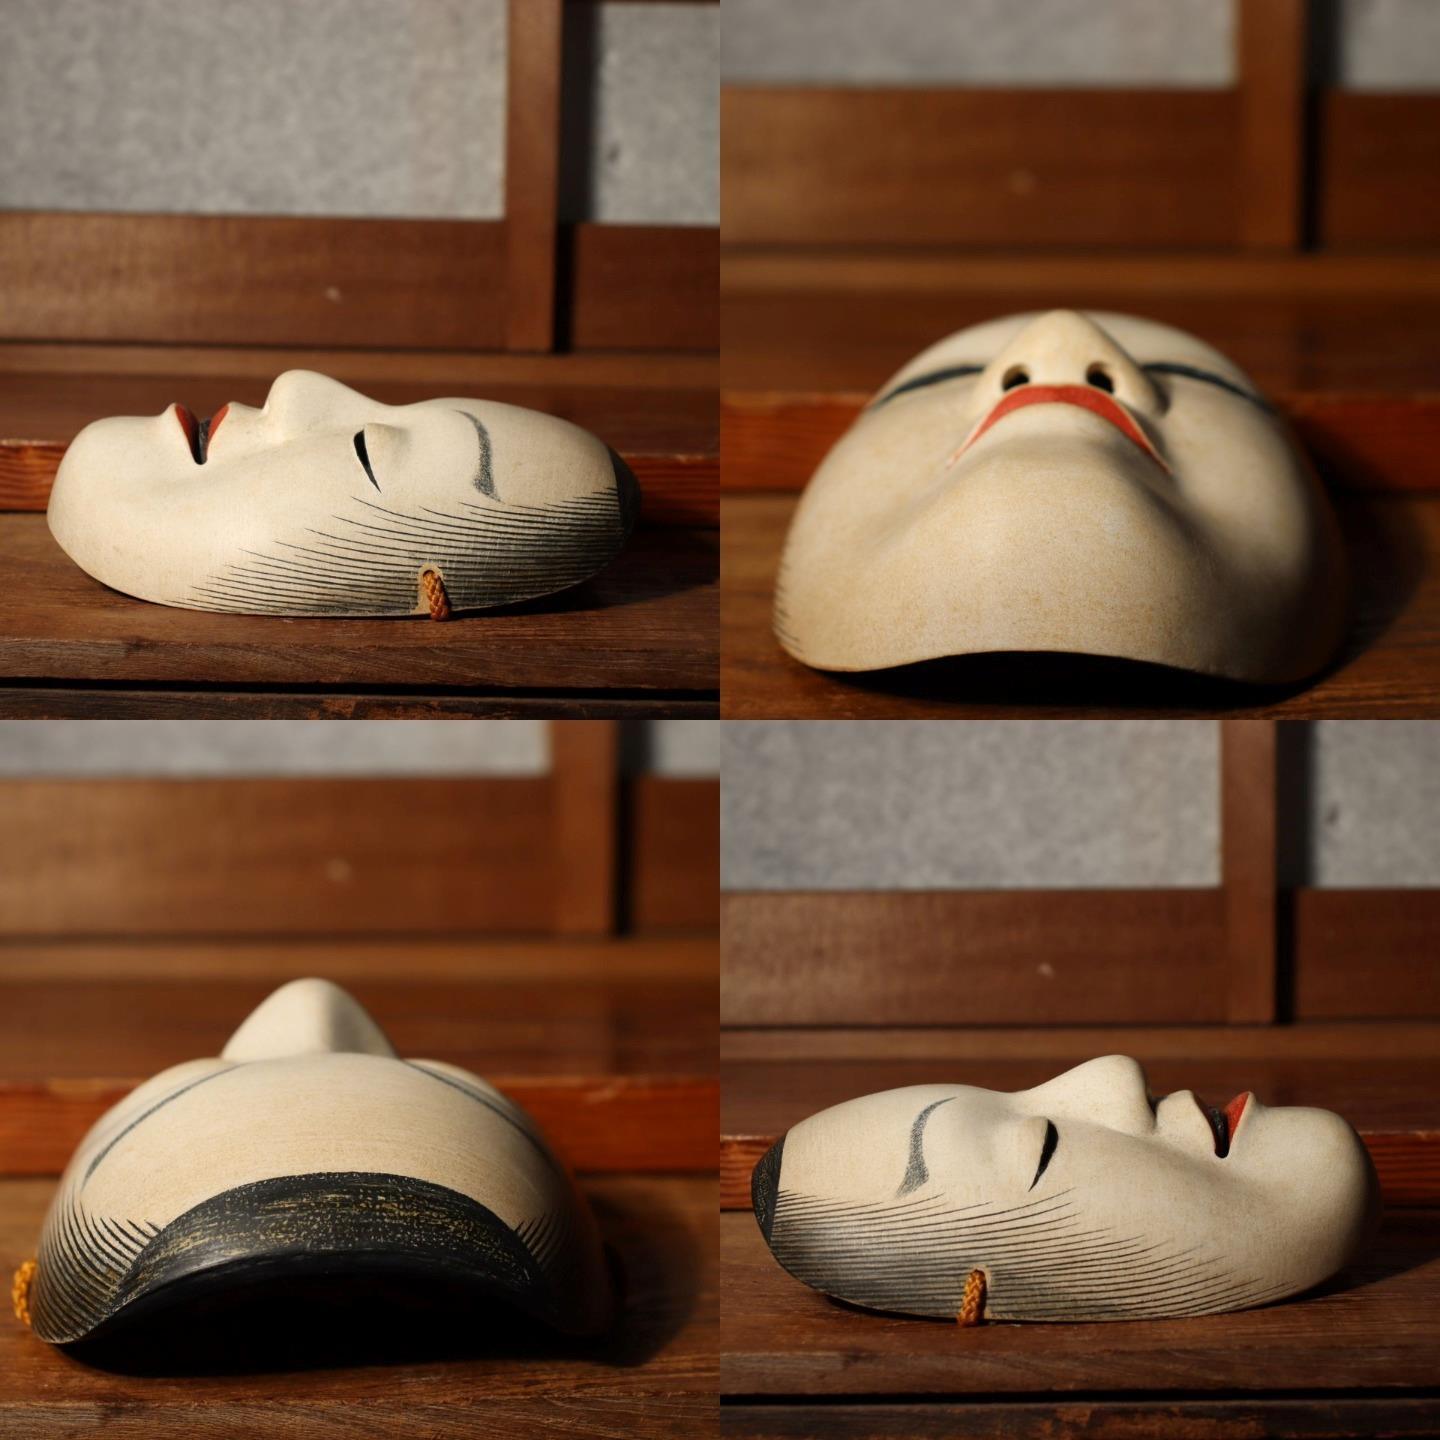 Japanese wooden Kyogen Noh Mask Douji semimaru jido MSK445